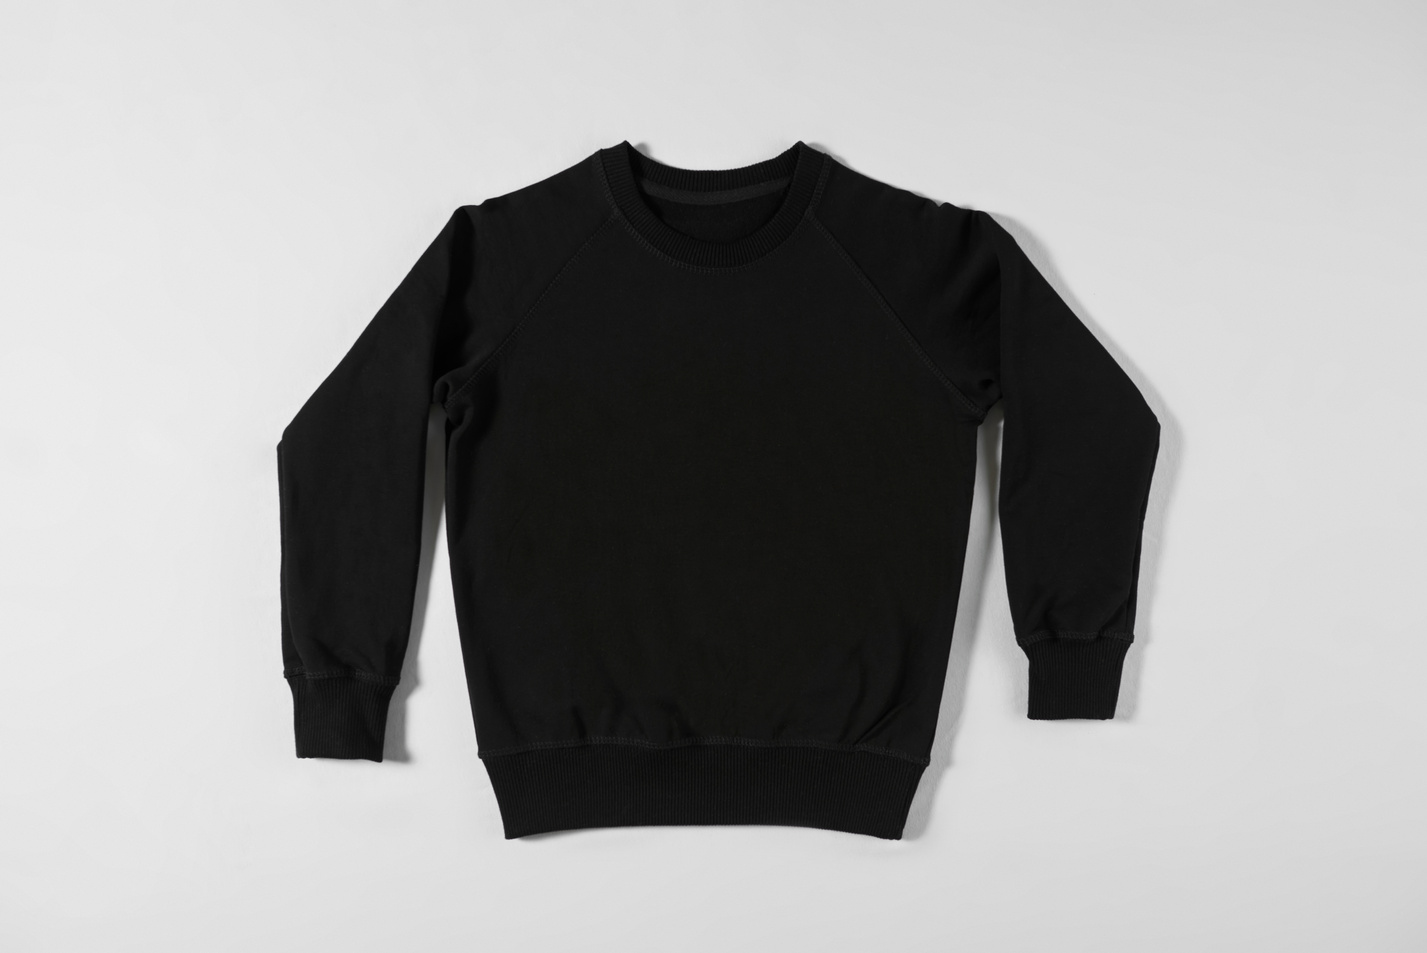 Black sweatshirt on light background